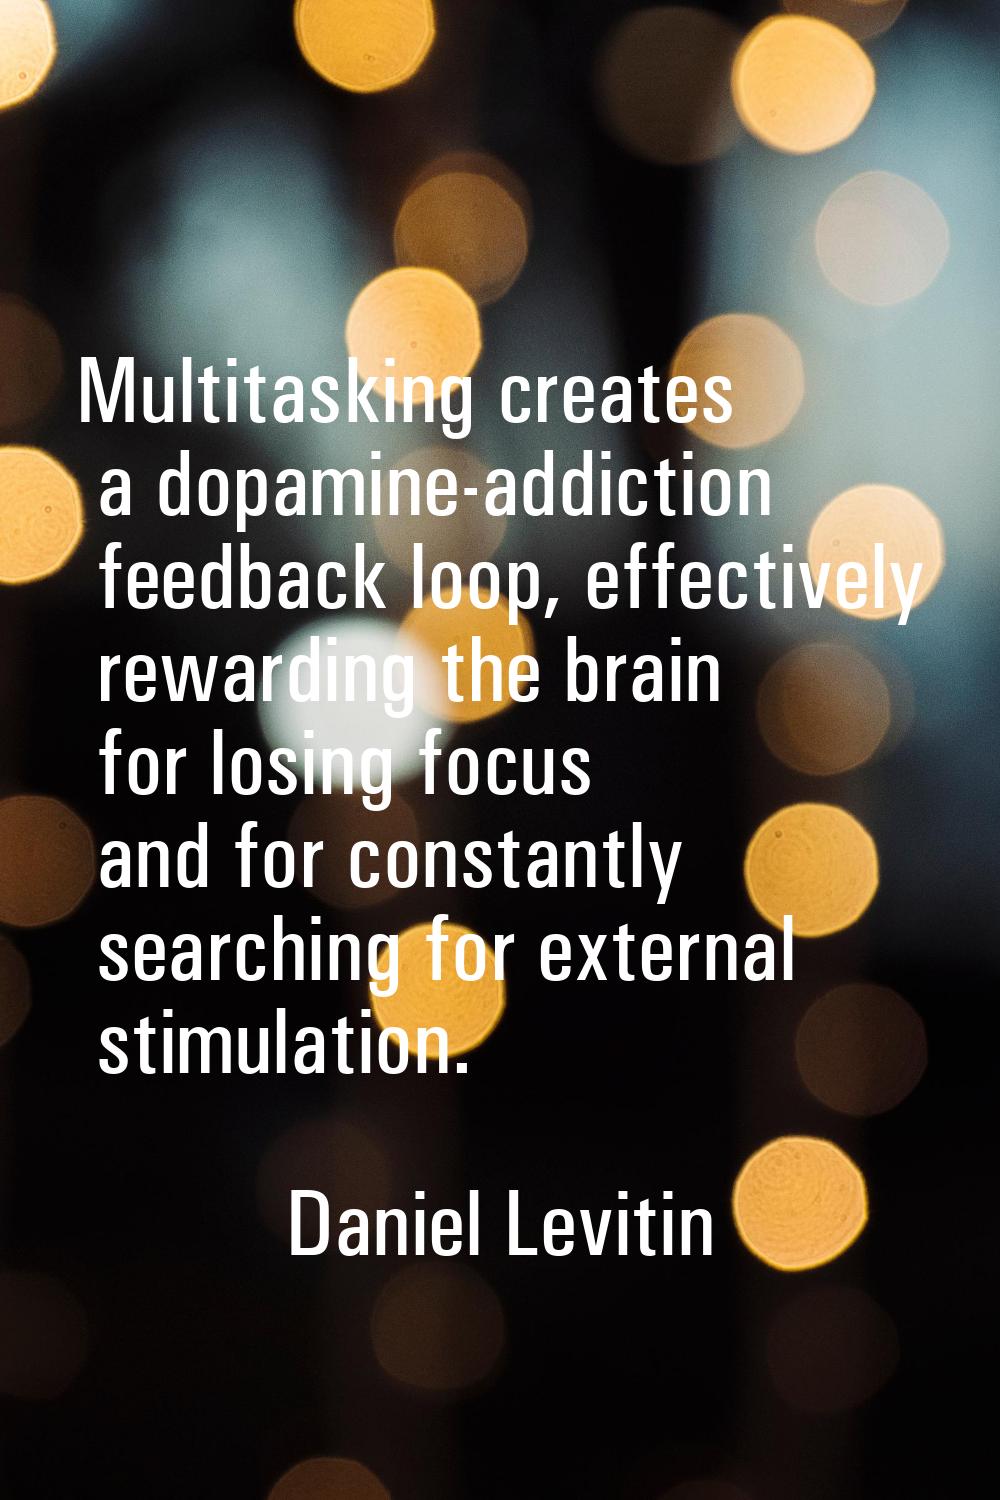 Multitasking creates a dopamine-addiction feedback loop, effectively rewarding the brain for losing